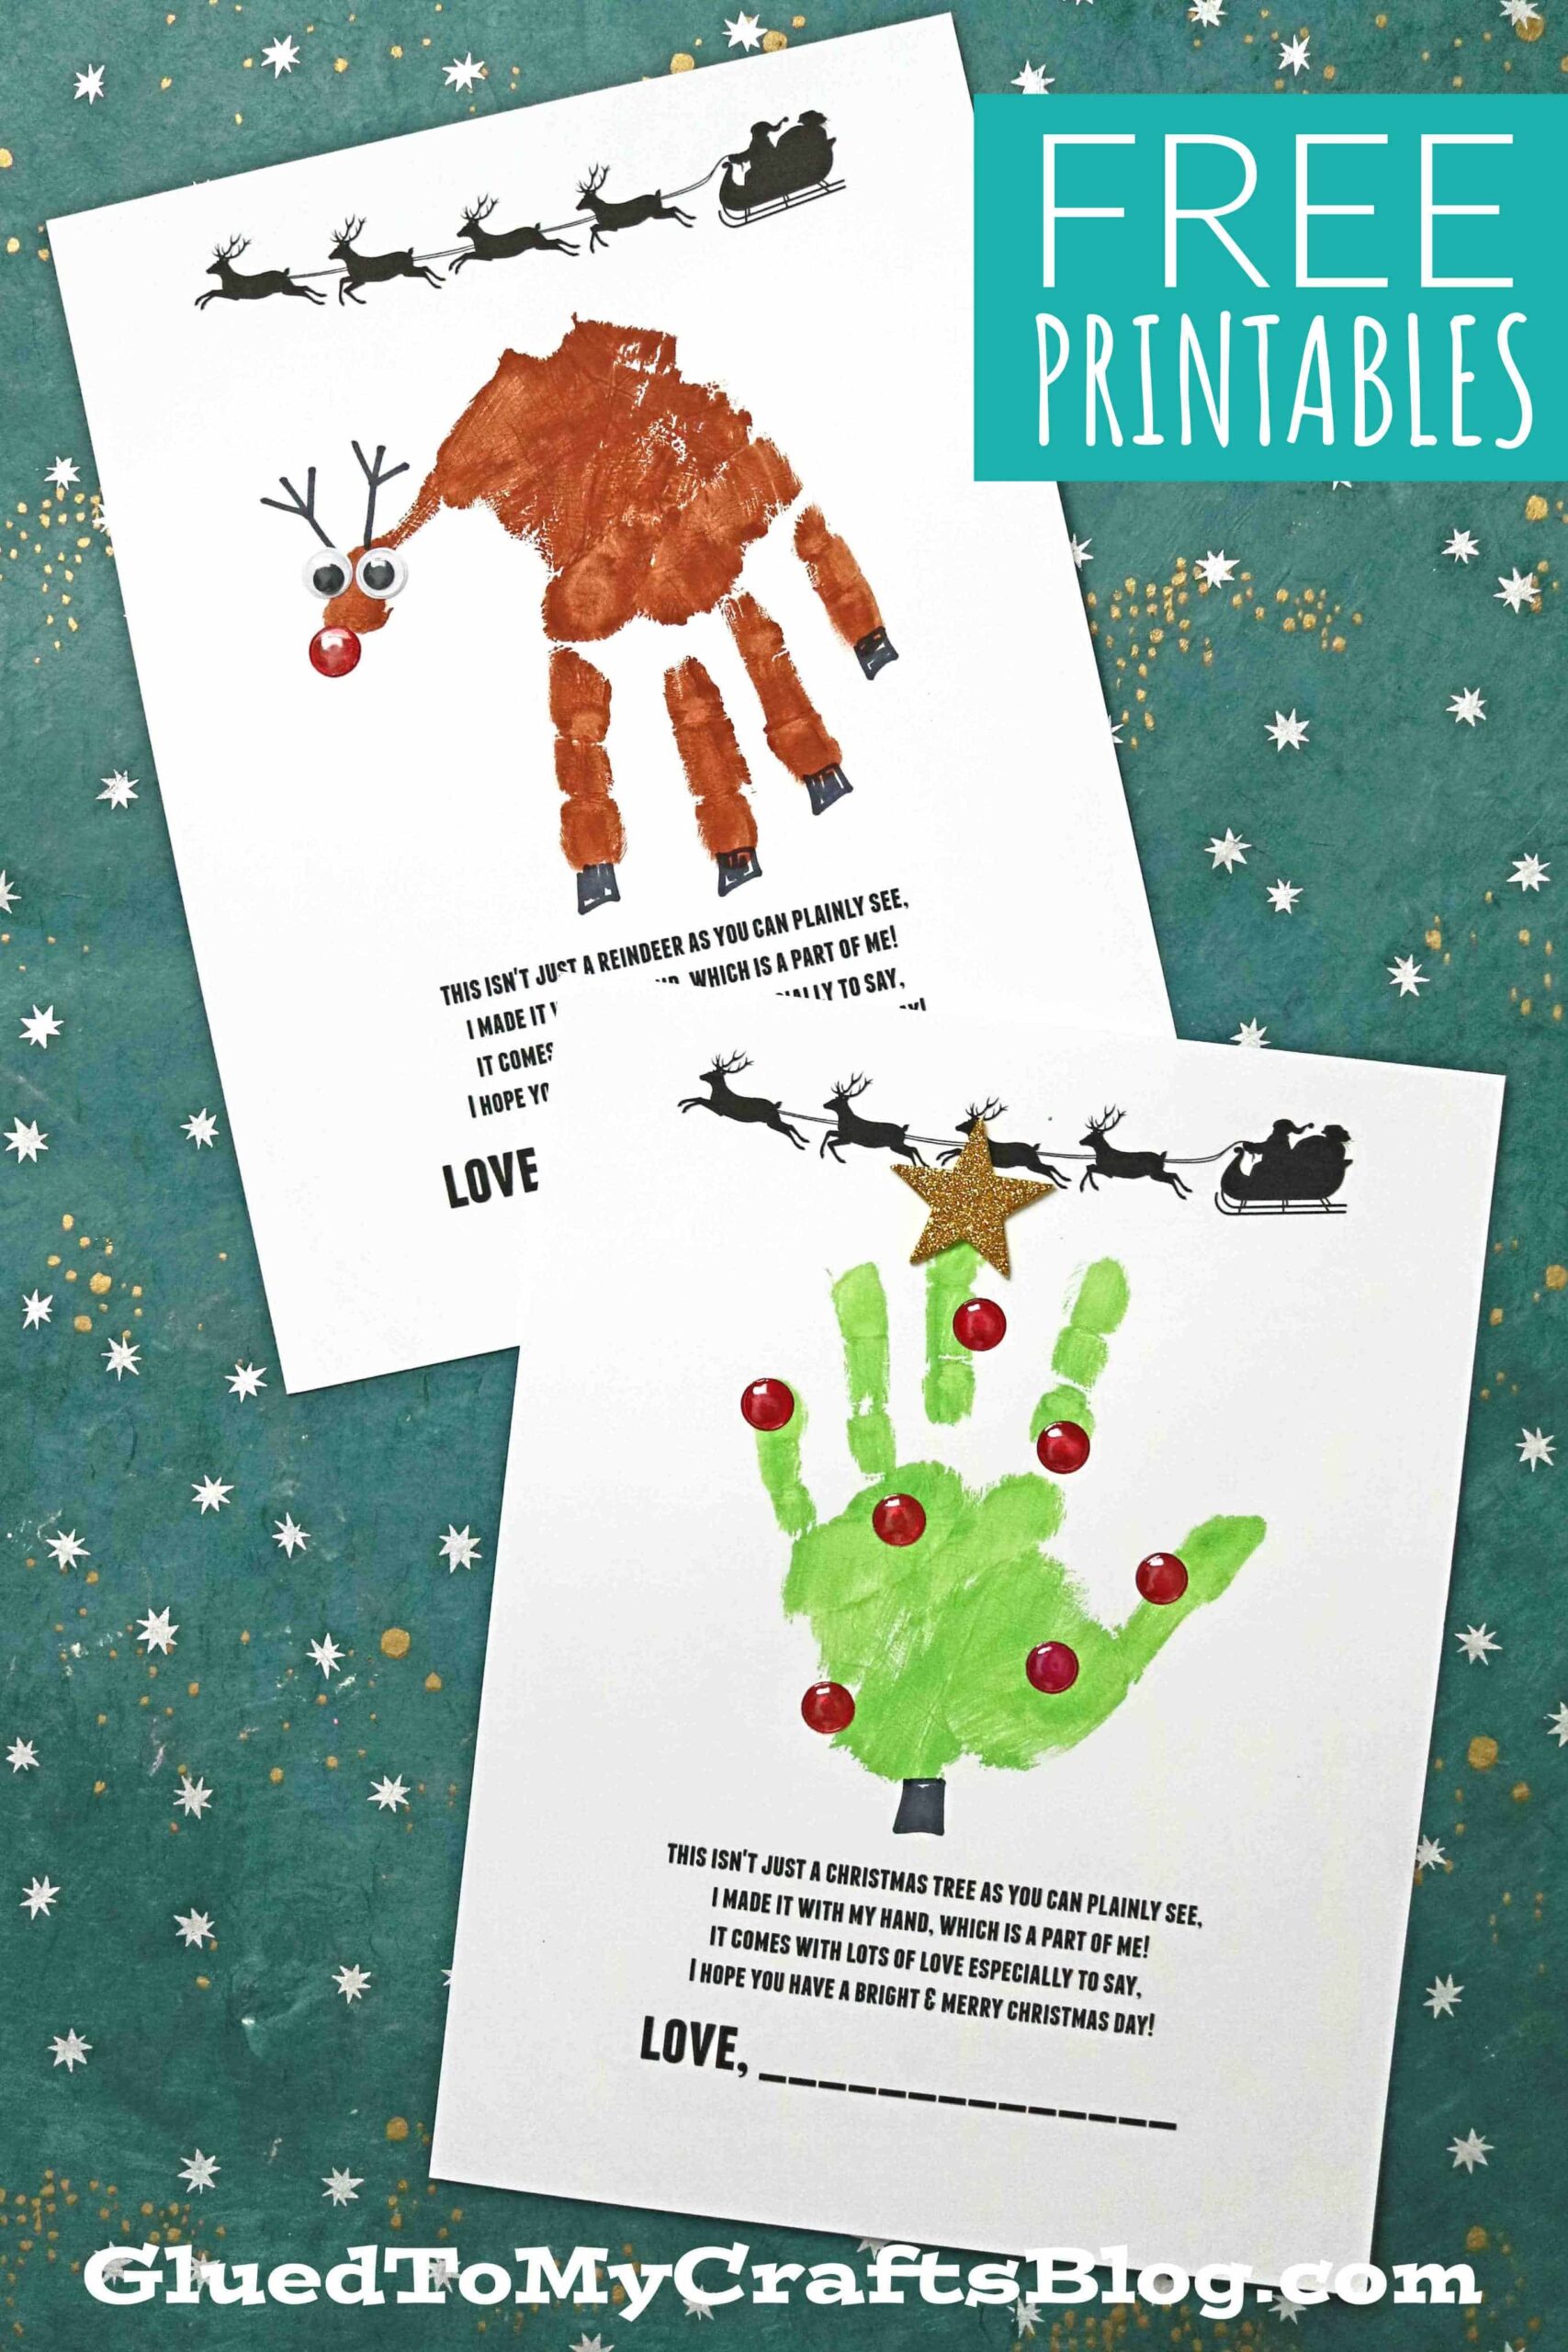 Handprint Holiday Poems For Christmas